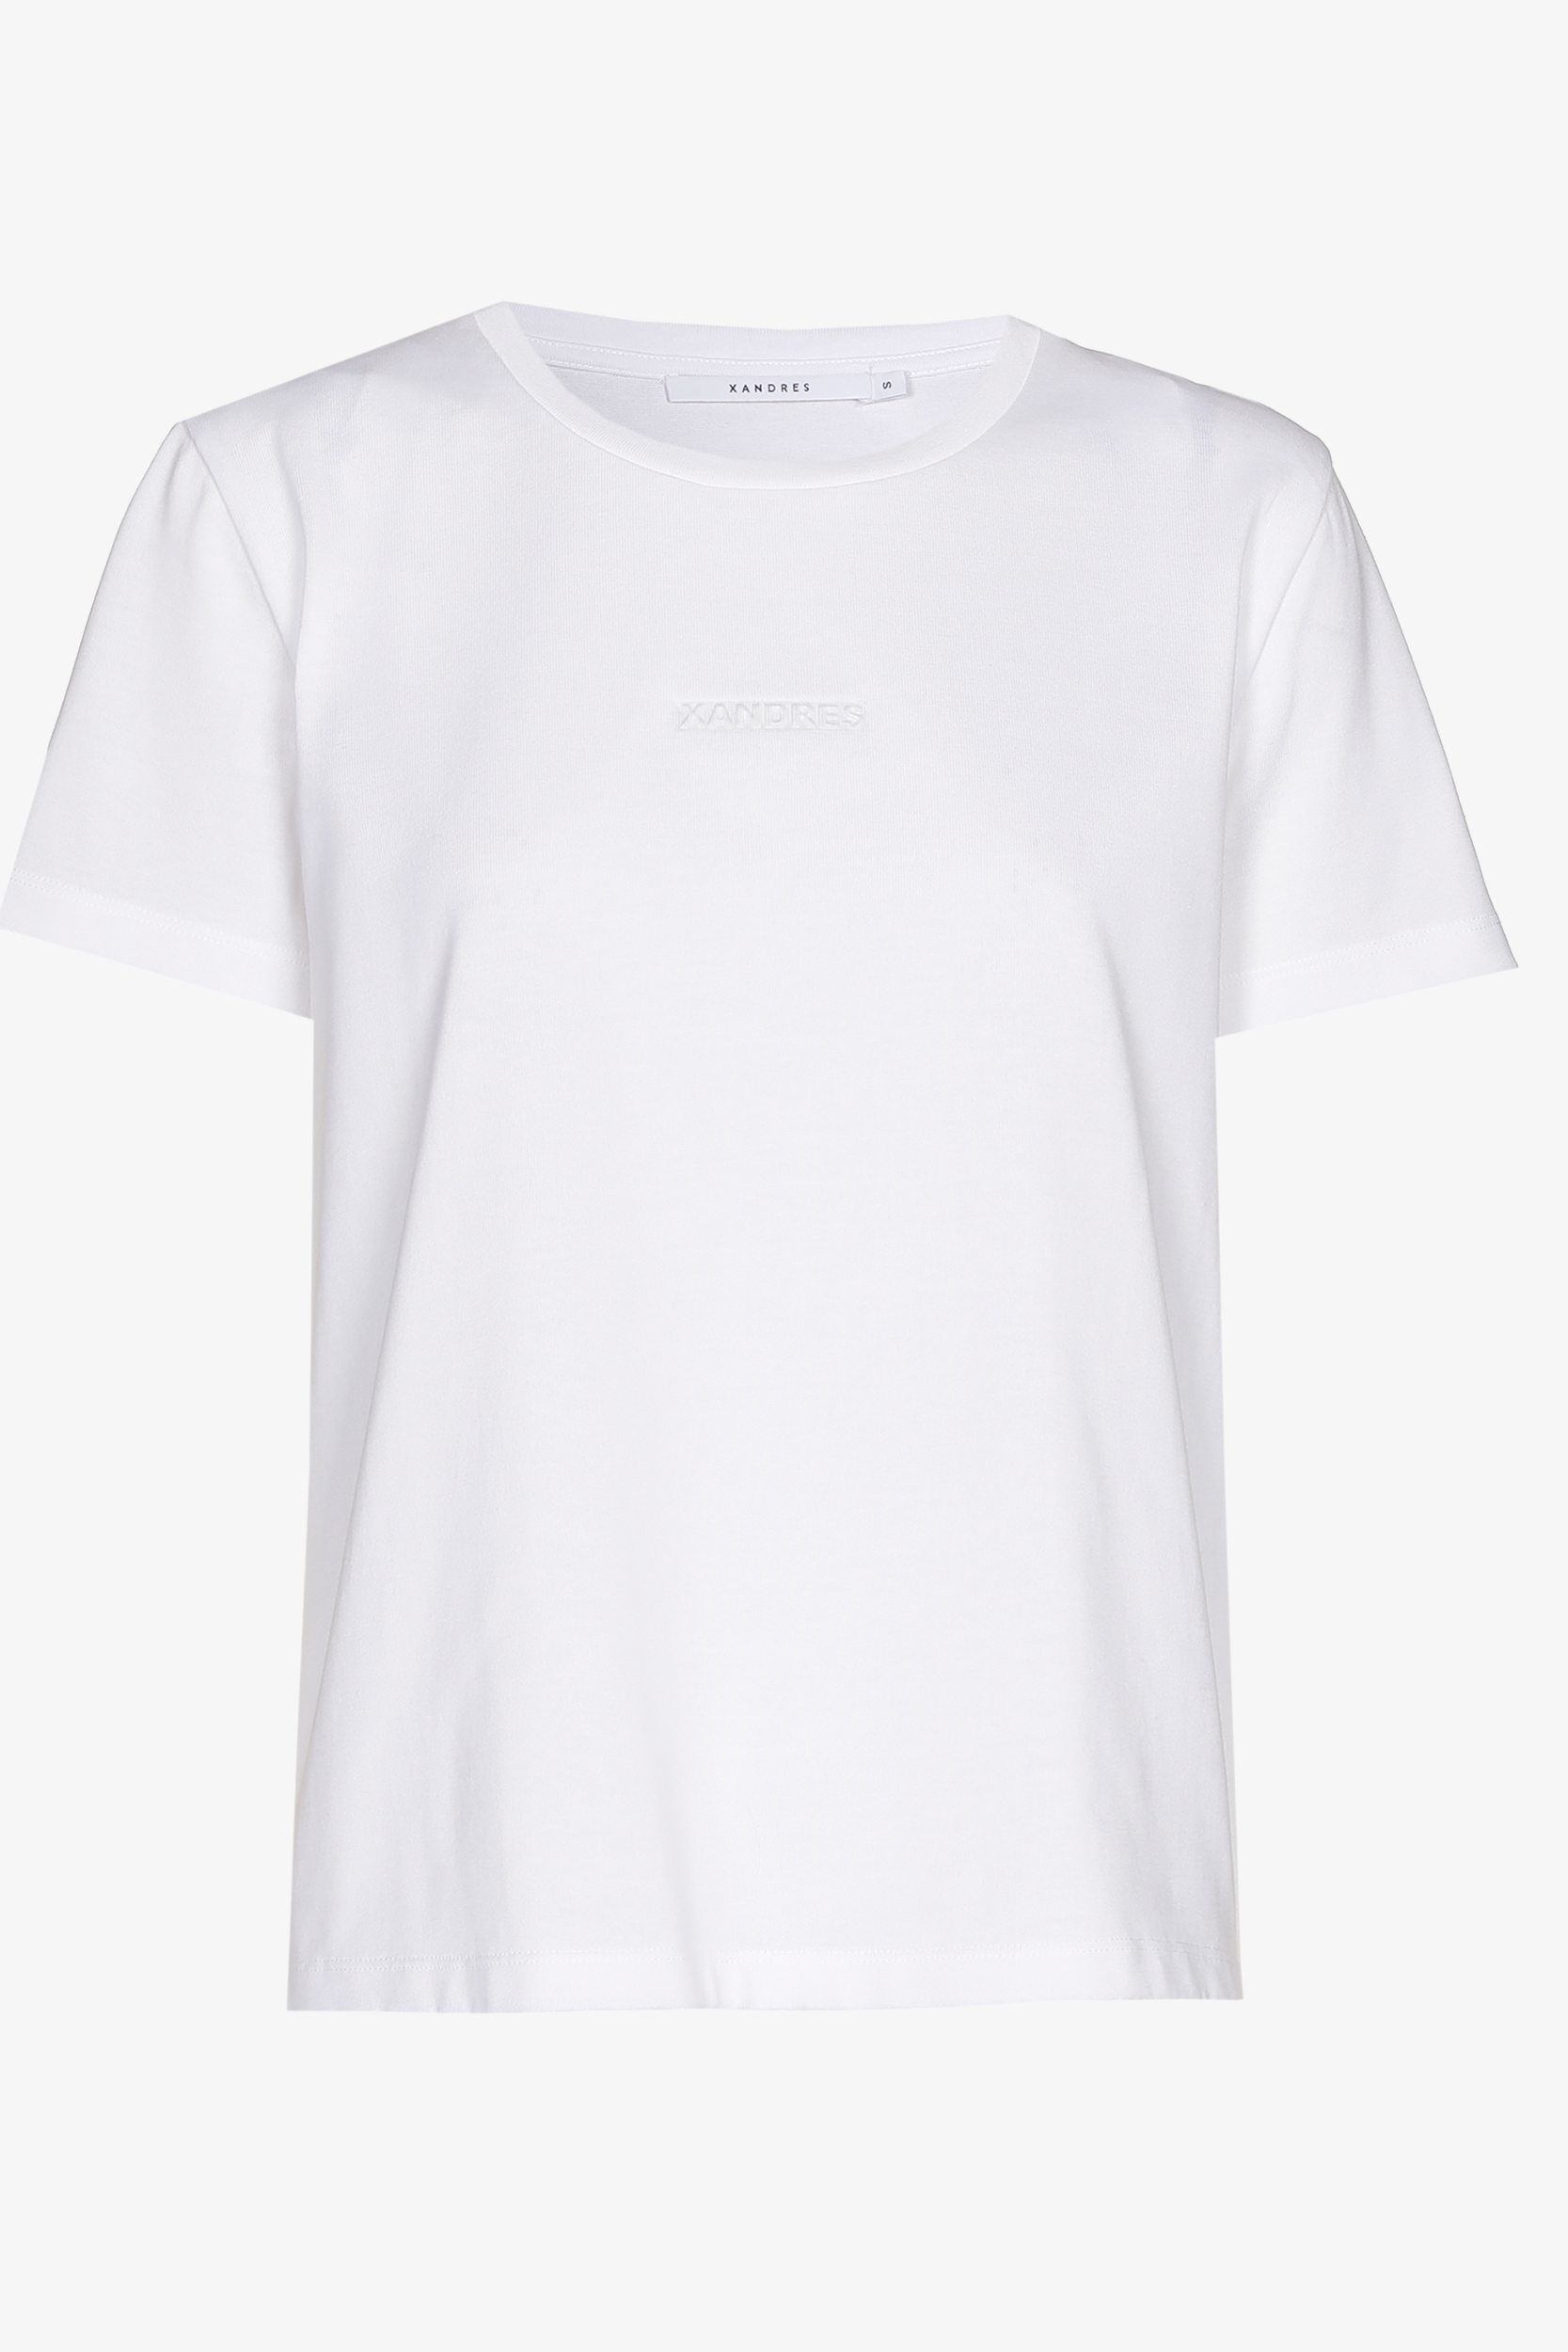 Baumwoll-T-Shirt mit Xandres-Logo